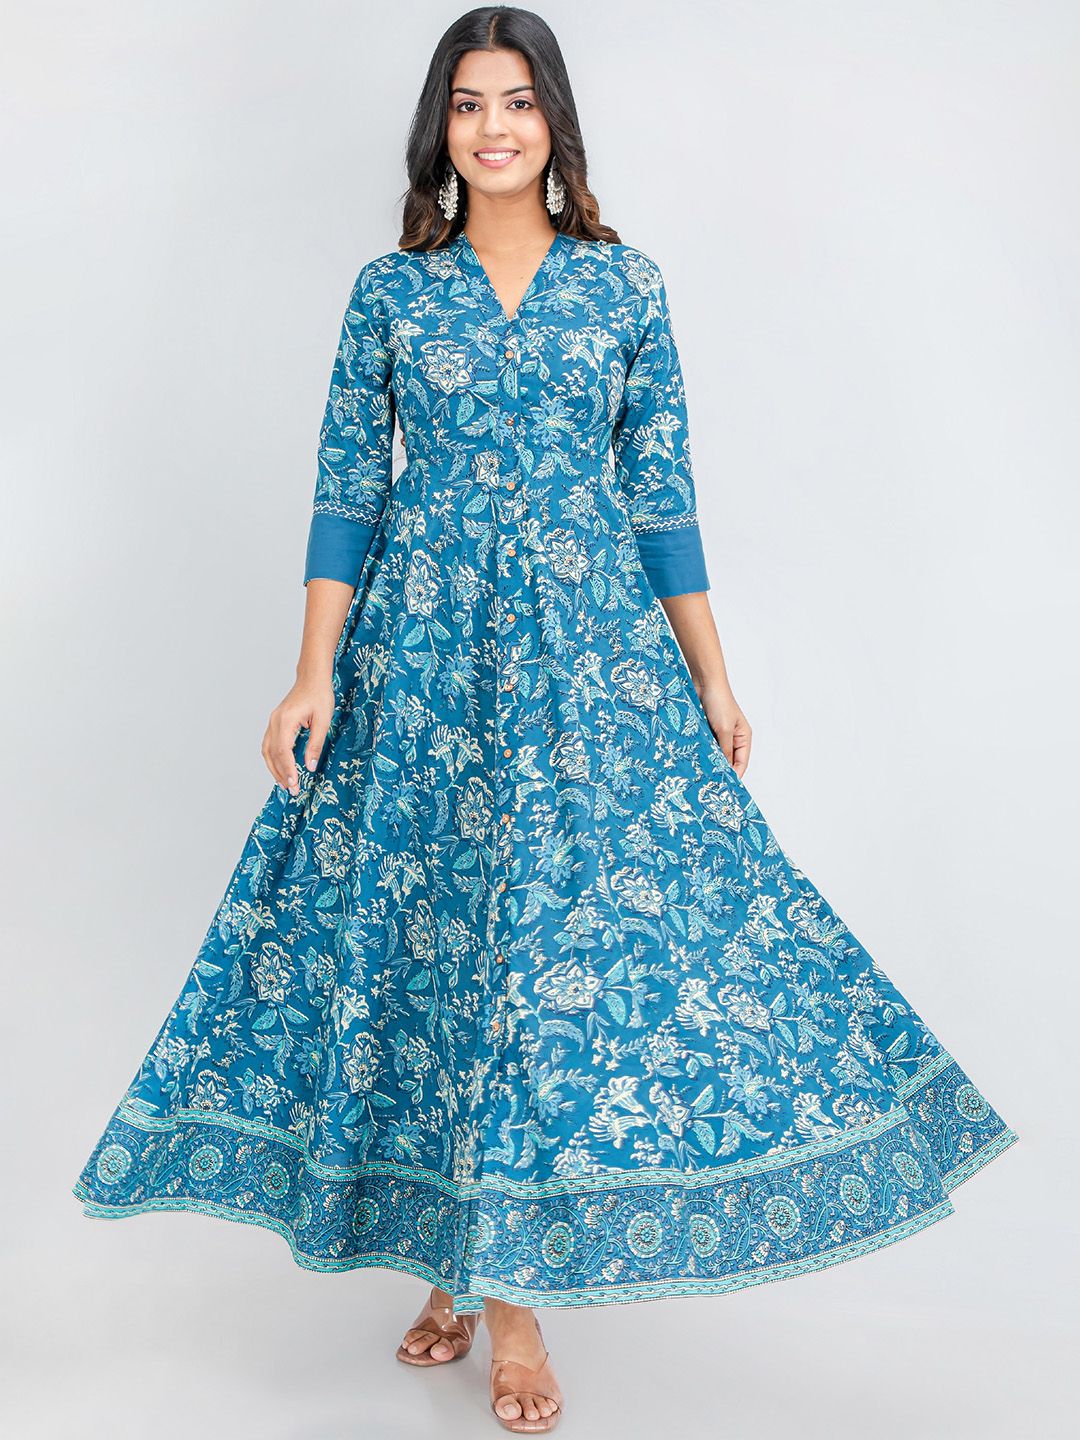 SUTI Floral Print Ethnic Maxi Cotton Dress Price in India